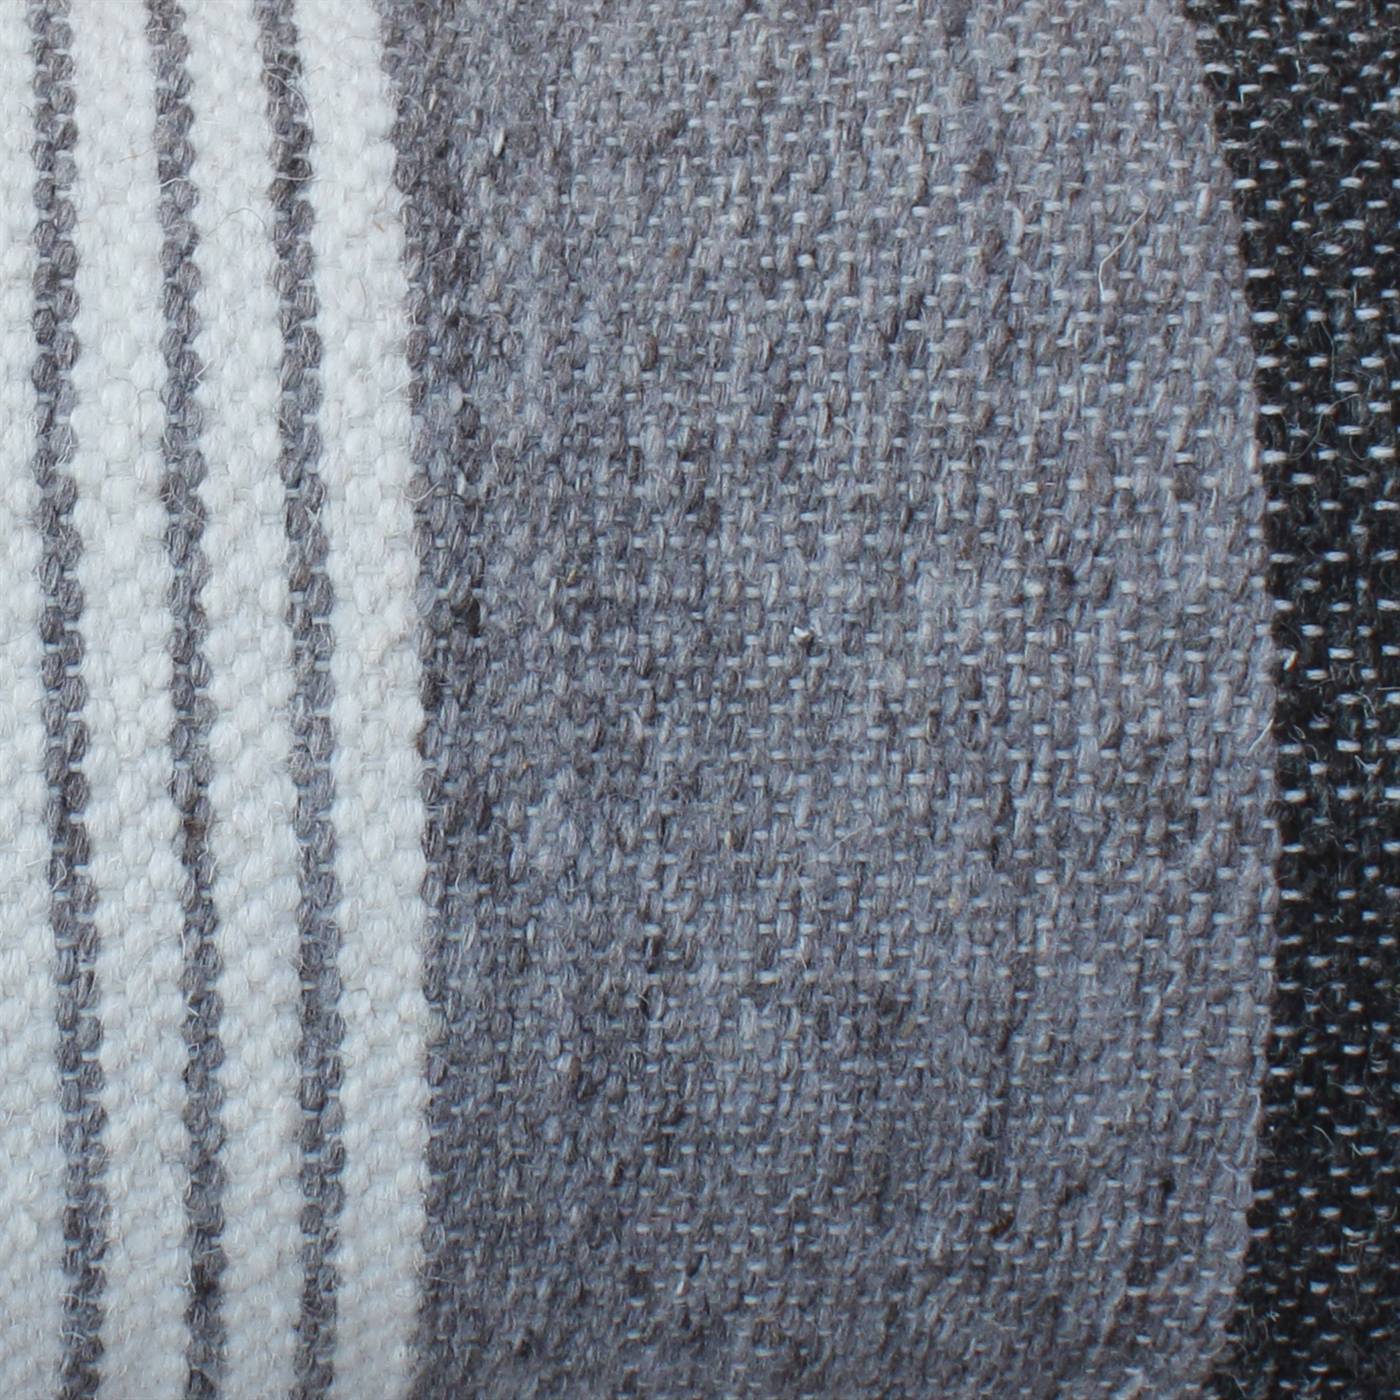 Palomo Lumber Cushion, 36x91 cm, Natural White, Grey, Charcoal, Wool, PET, Hand Woven, Pitloom, Flat Weave